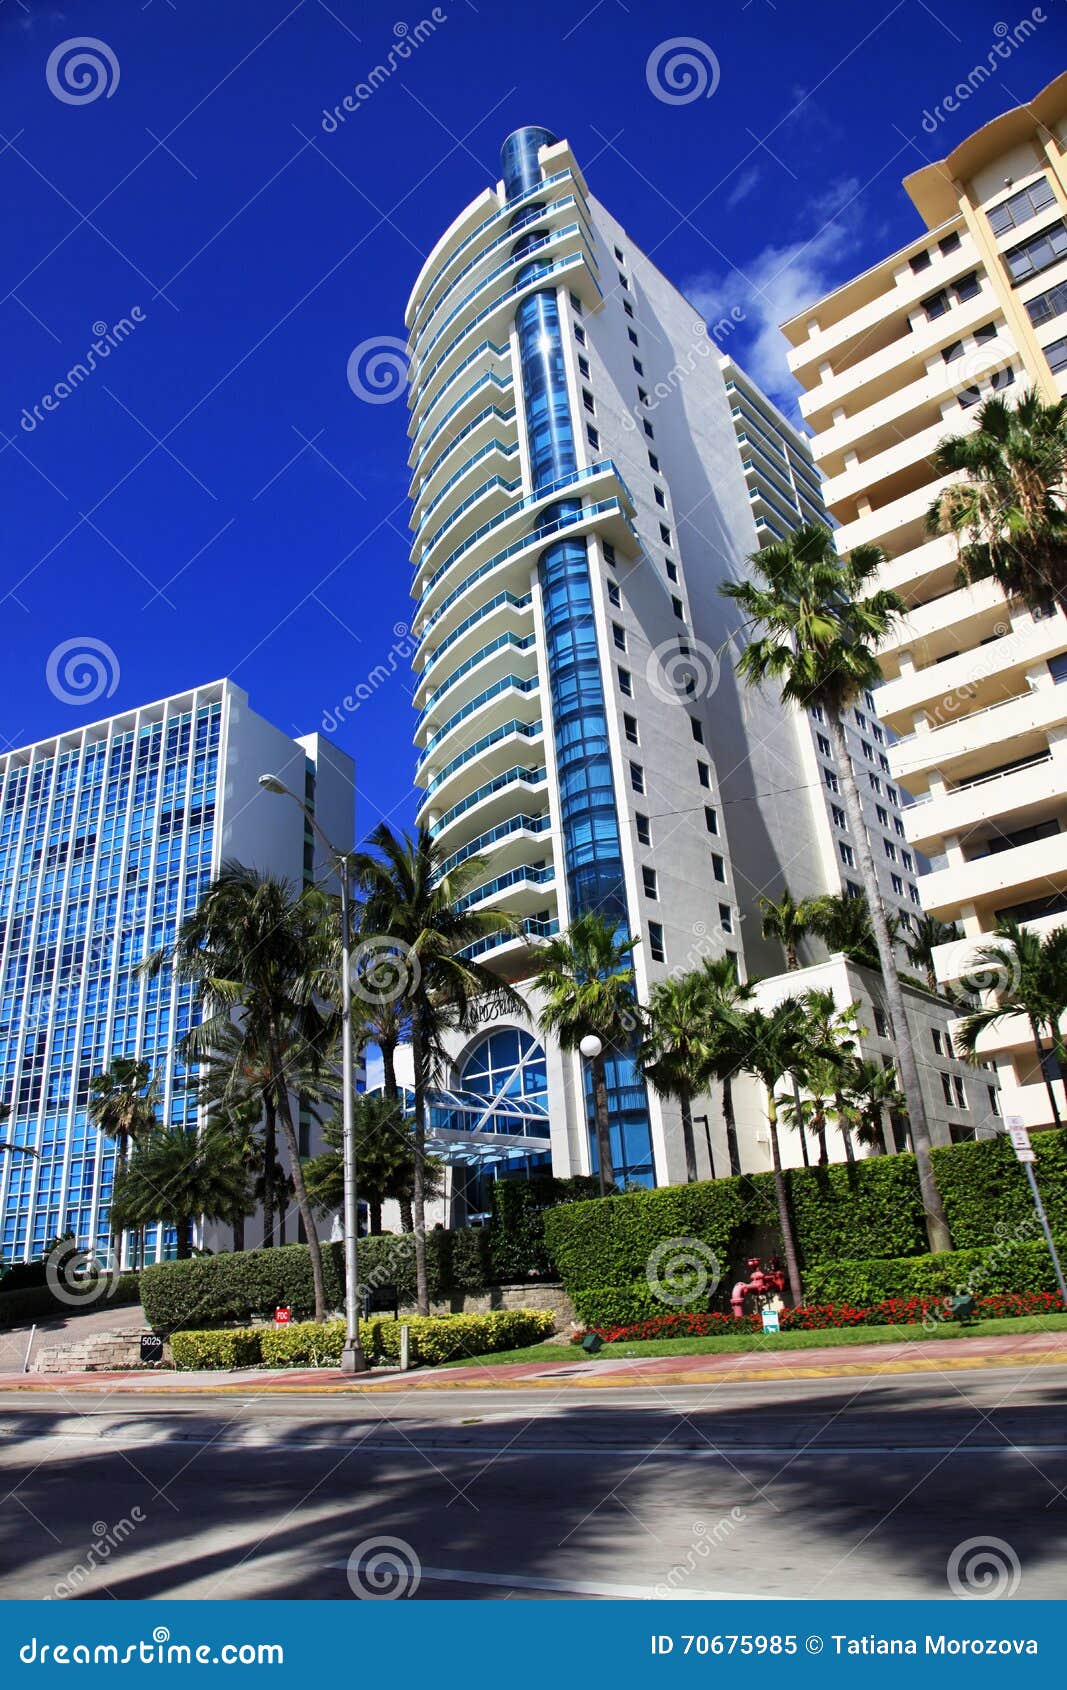  Luxurious  Apartment  Building  In Miami Editorial Image 